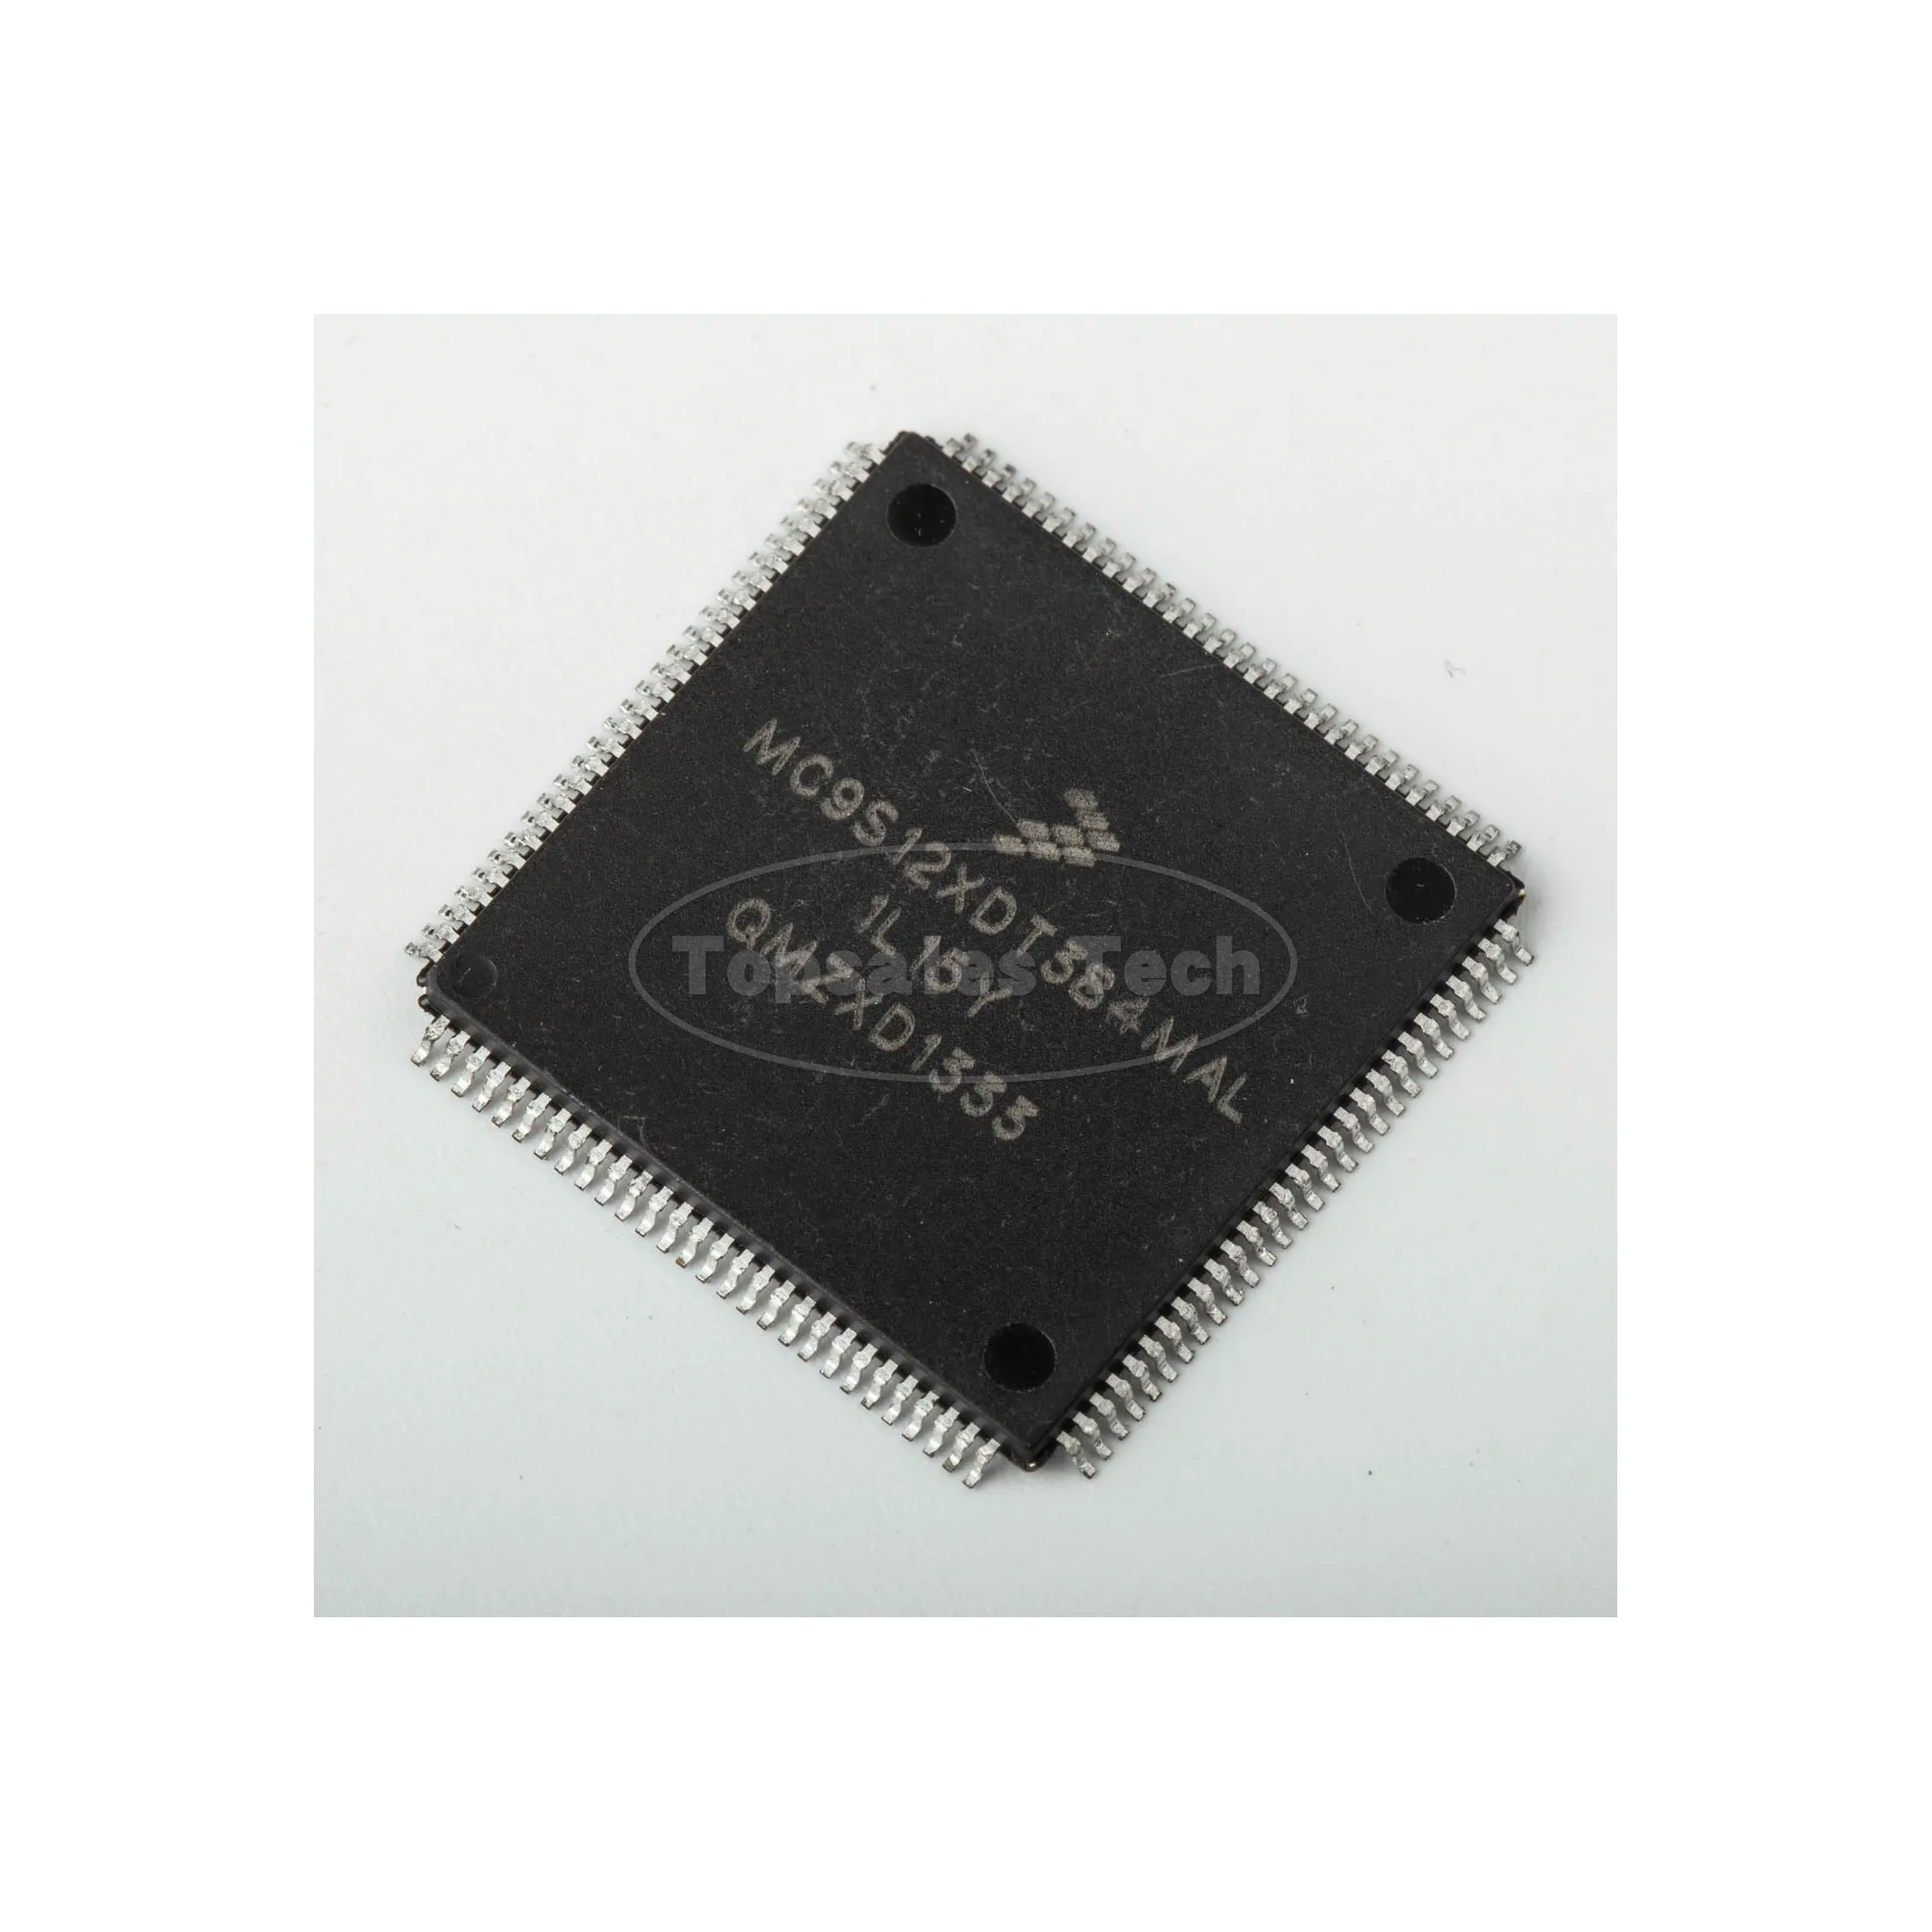 new arrive MC9S12XDP512VAG MCU LQFP-144 integrated circuits FPGA PCB'A FOR raspberry pi